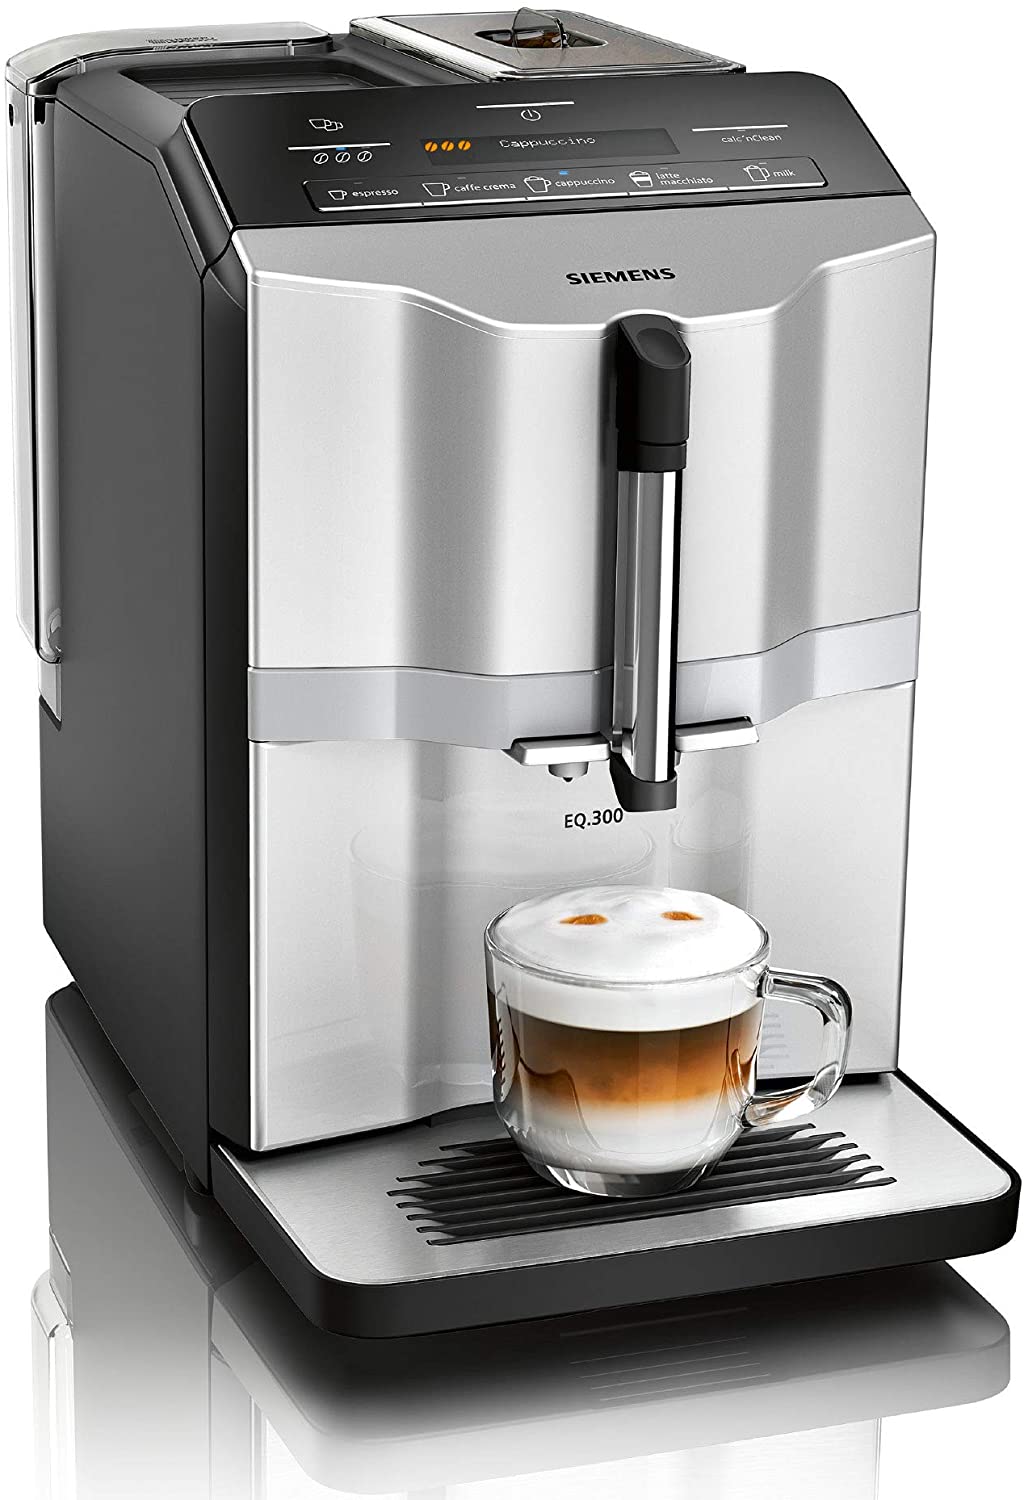 Siemens EQ.300 Fully Automatic Coffee Machine, Compact Size, Easy Operation, 1,300 Watt, Black, TI353501DE